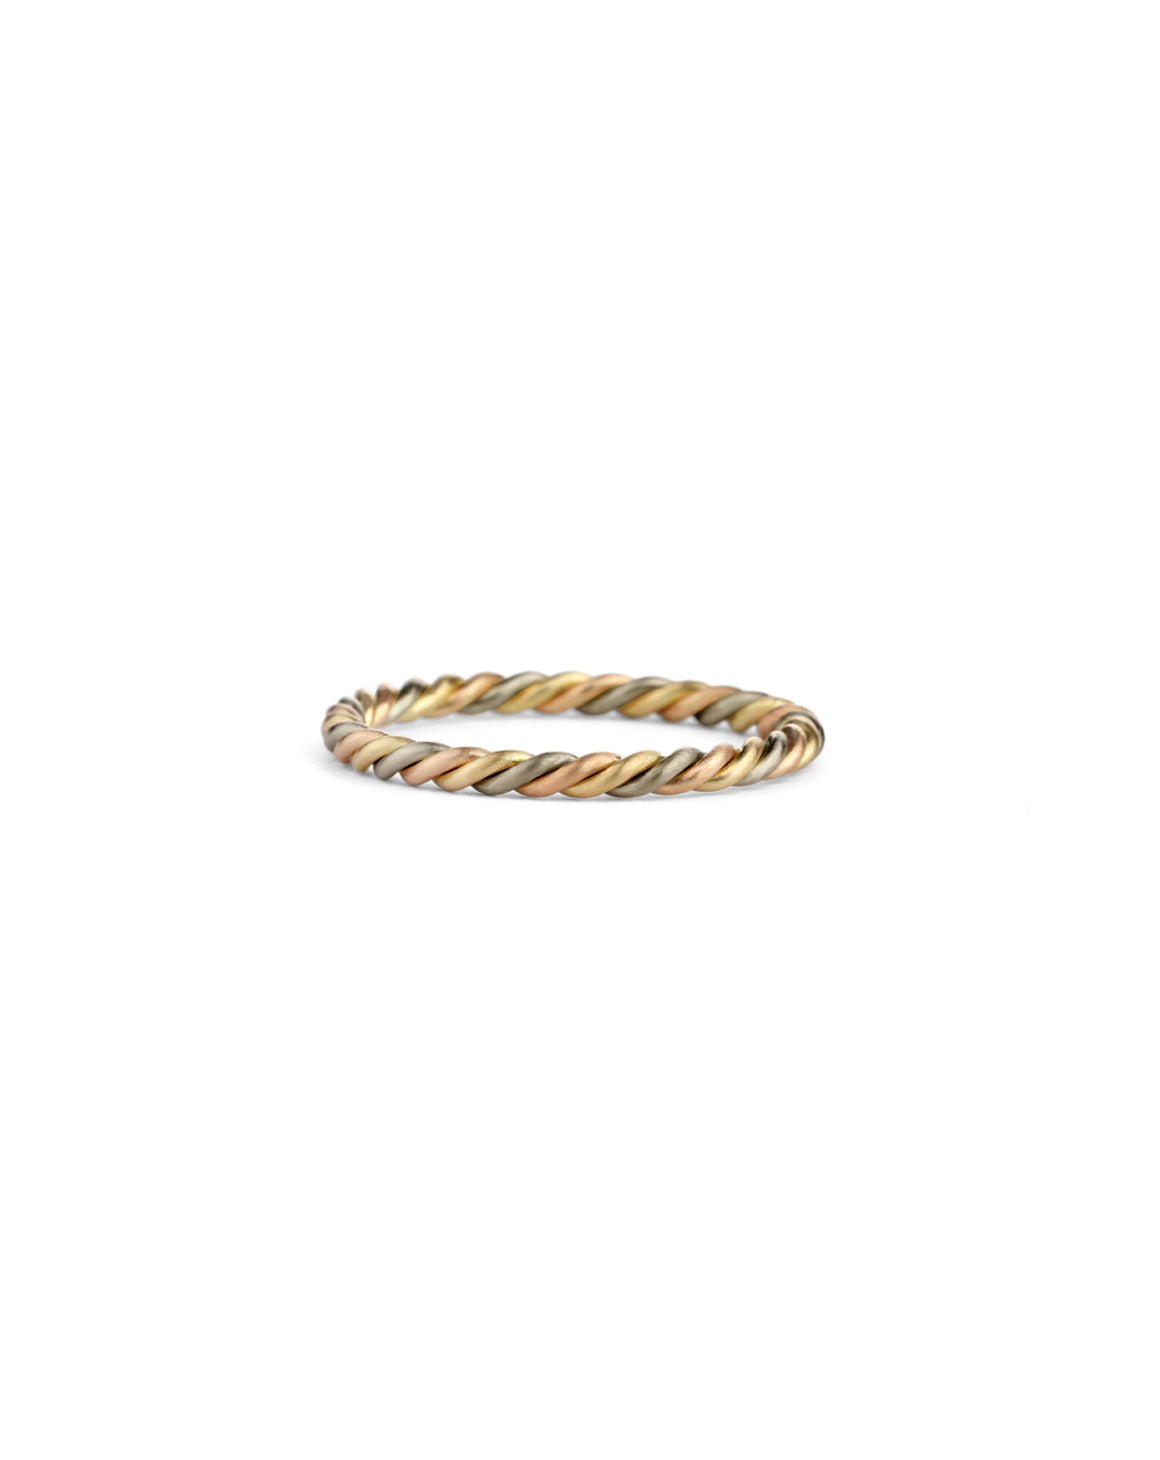 Three Strand Rope Ring - Multi Gold - Fine